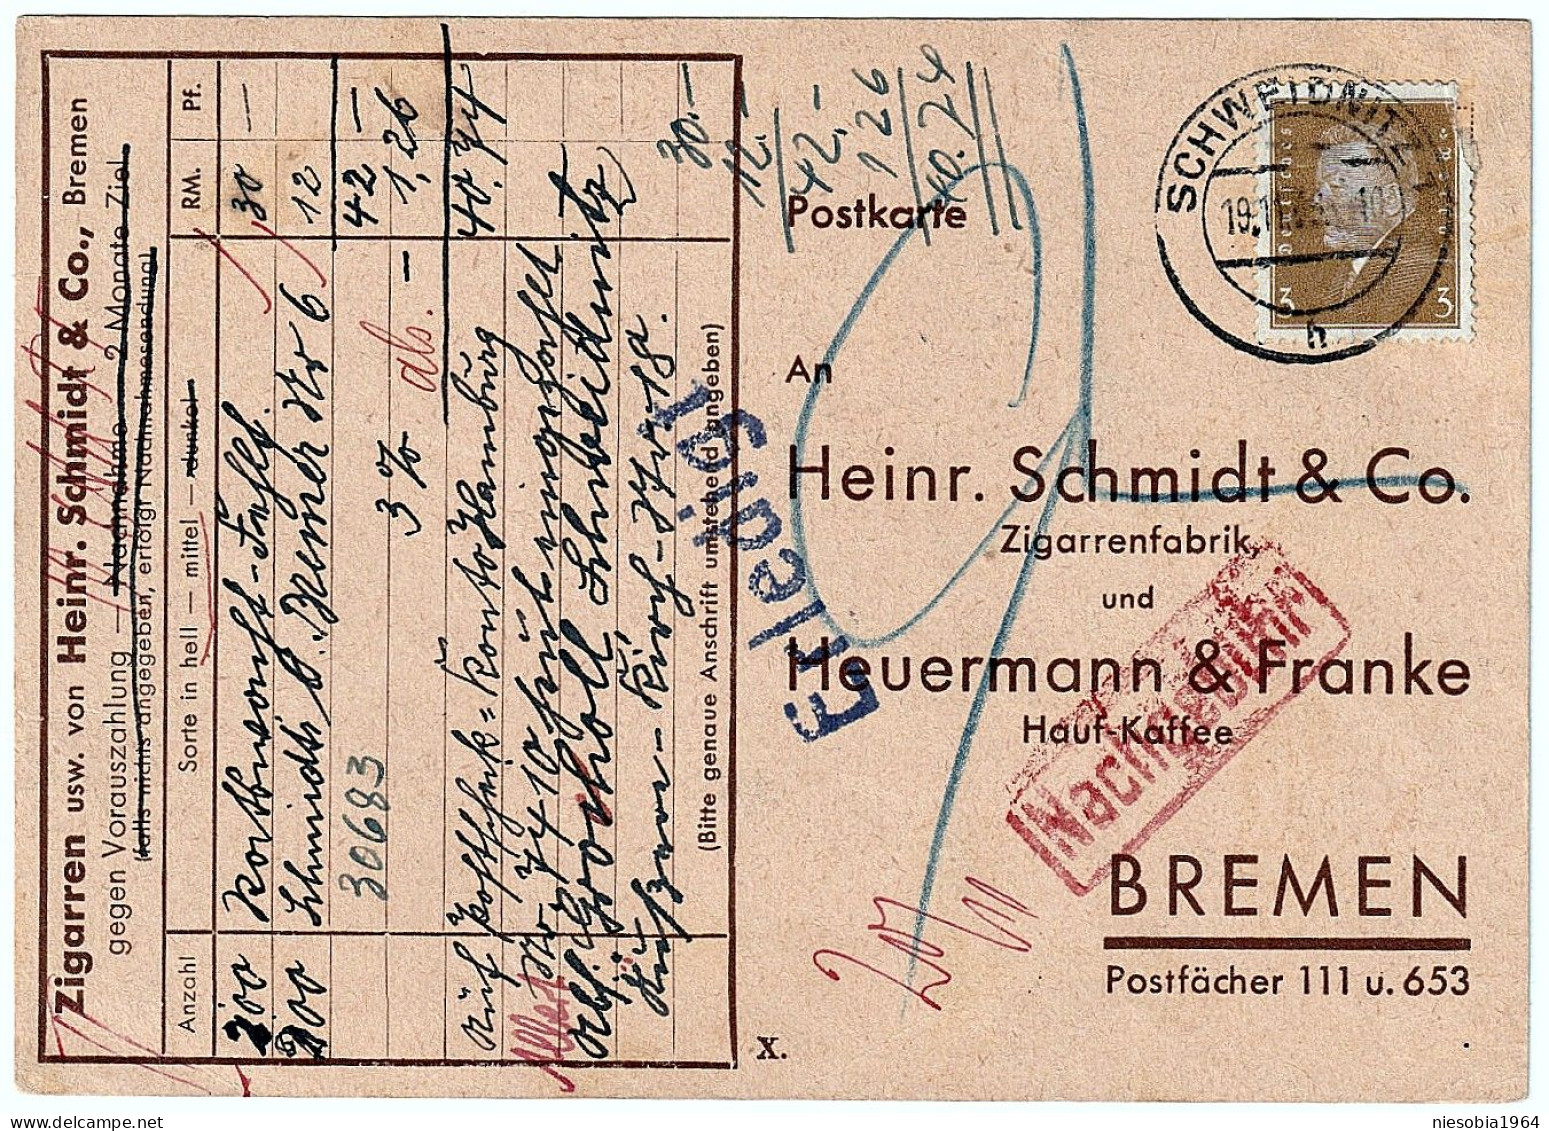 Company Postcard Heinr. Schmidt & Co.Cigar Factory And Heurenmann & Franke Hauf-Kaffe BREMEN Seal SCHWEIDNITZ 19/11/1938 - Cartes Postales